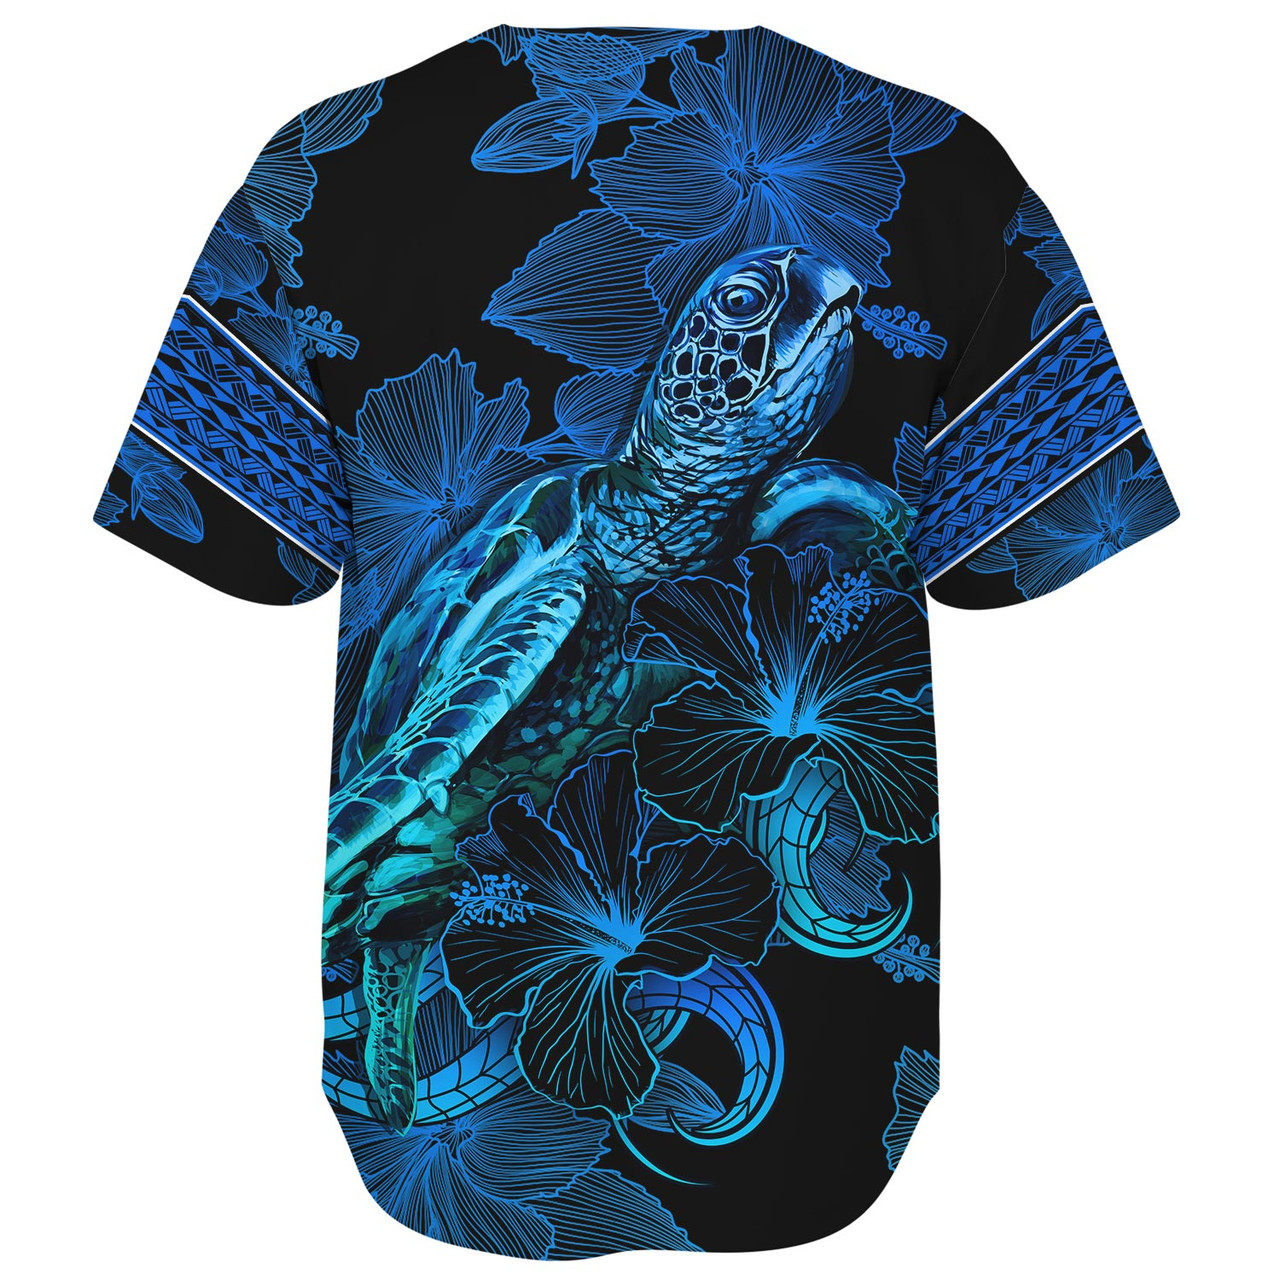 Fiji Baseball Shirt Sea Turtle With Blooming Hibiscus Flowers Tribal Blue